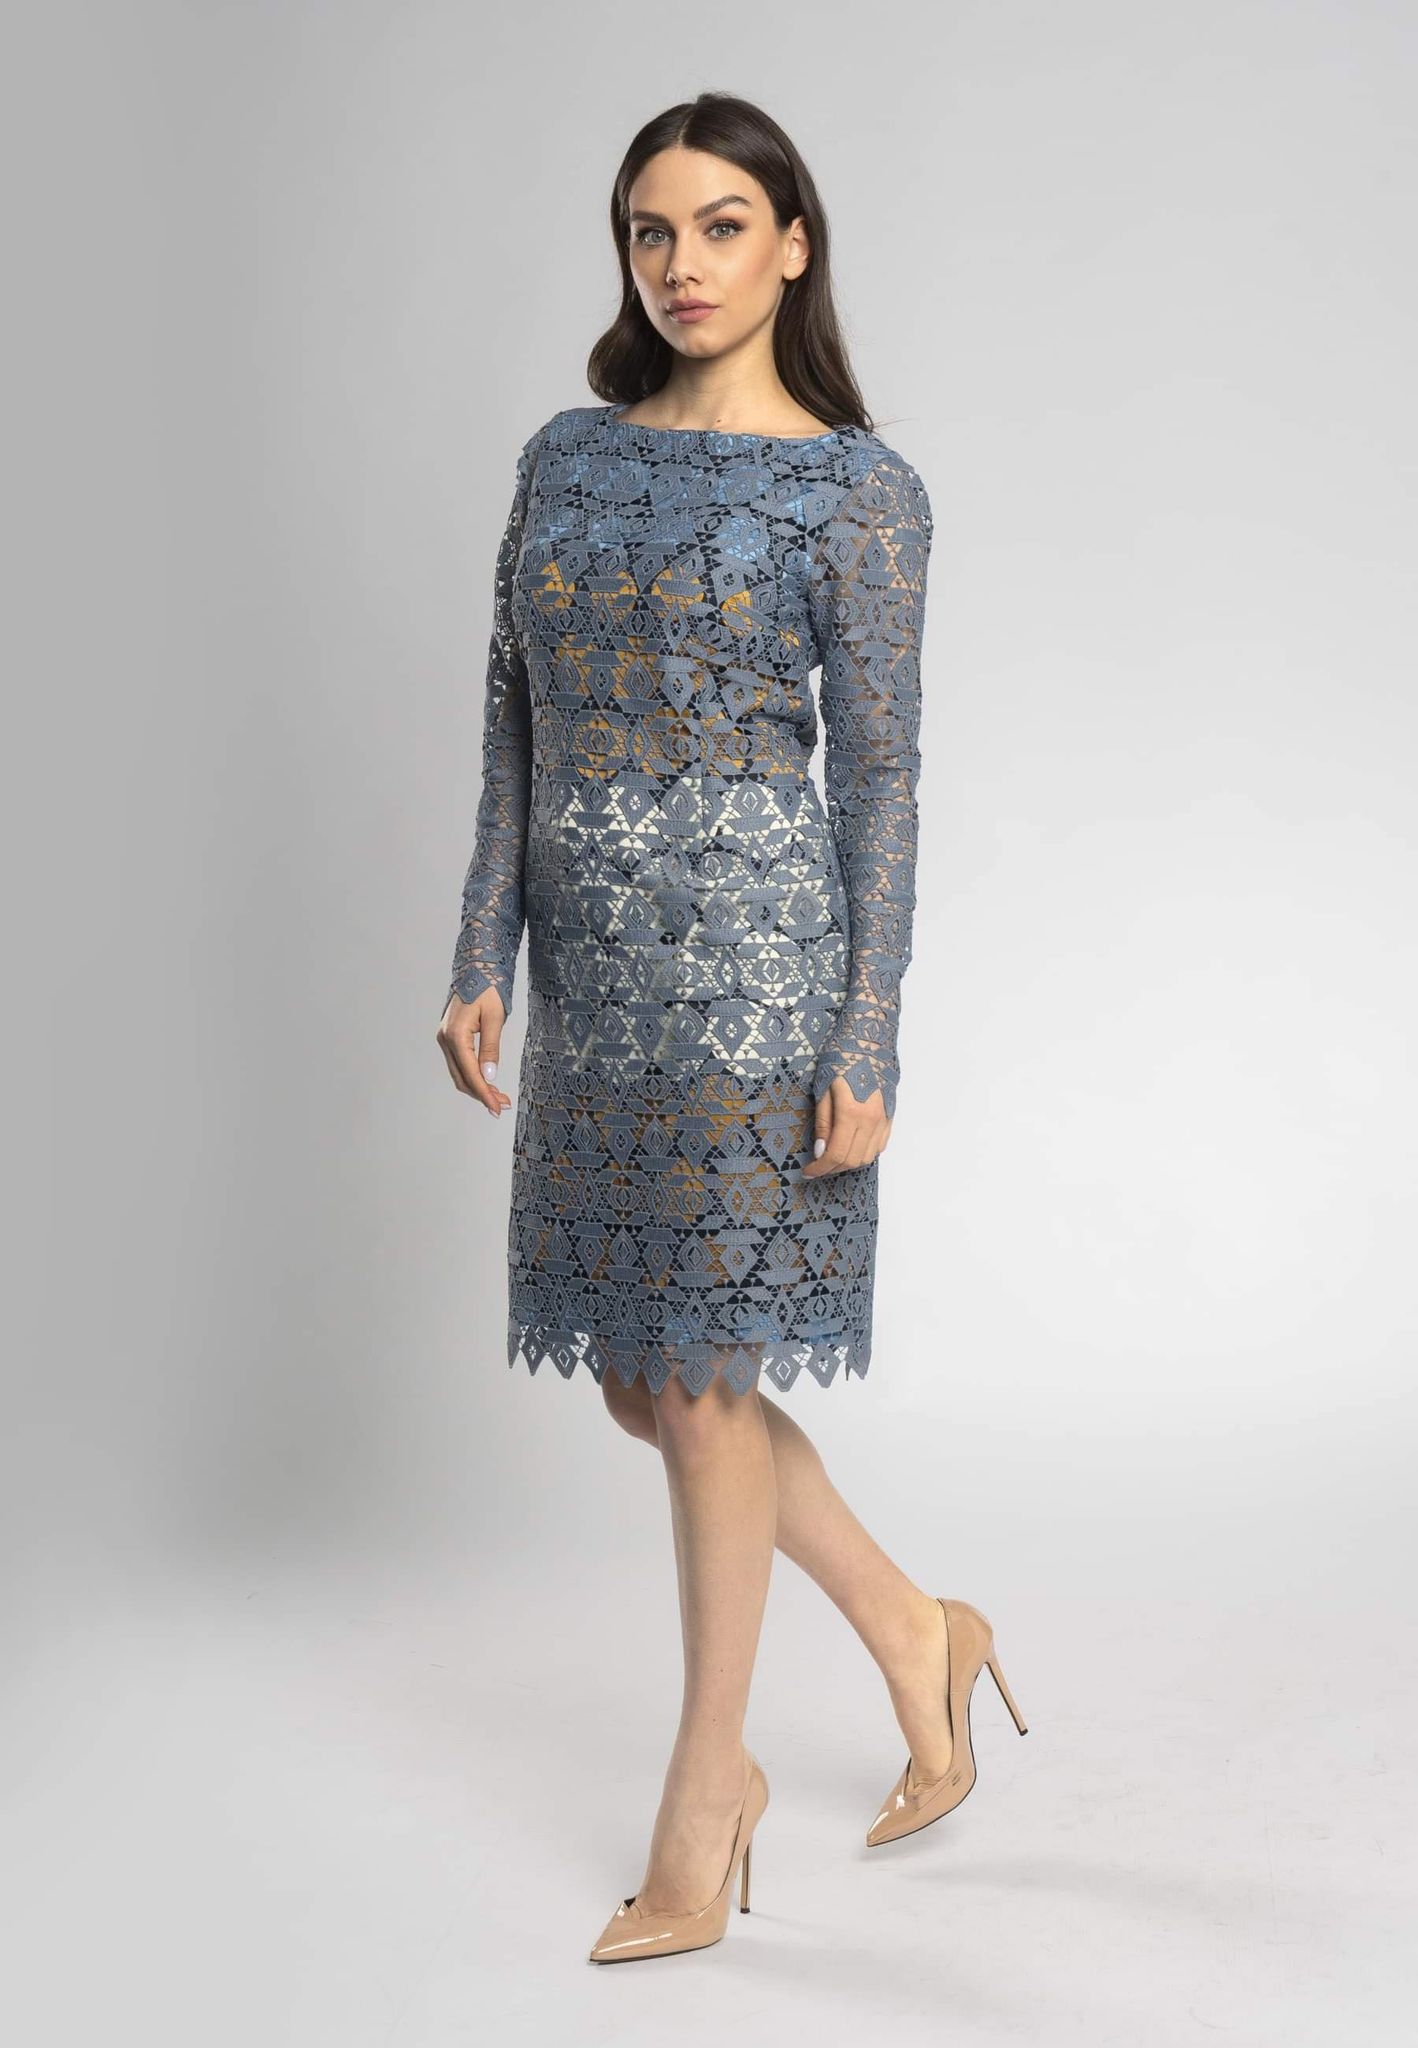 Italian lace sheath dress, modern feminine dress, elegant lace overlay dress, high-fashion dress, stylish floral lace dress